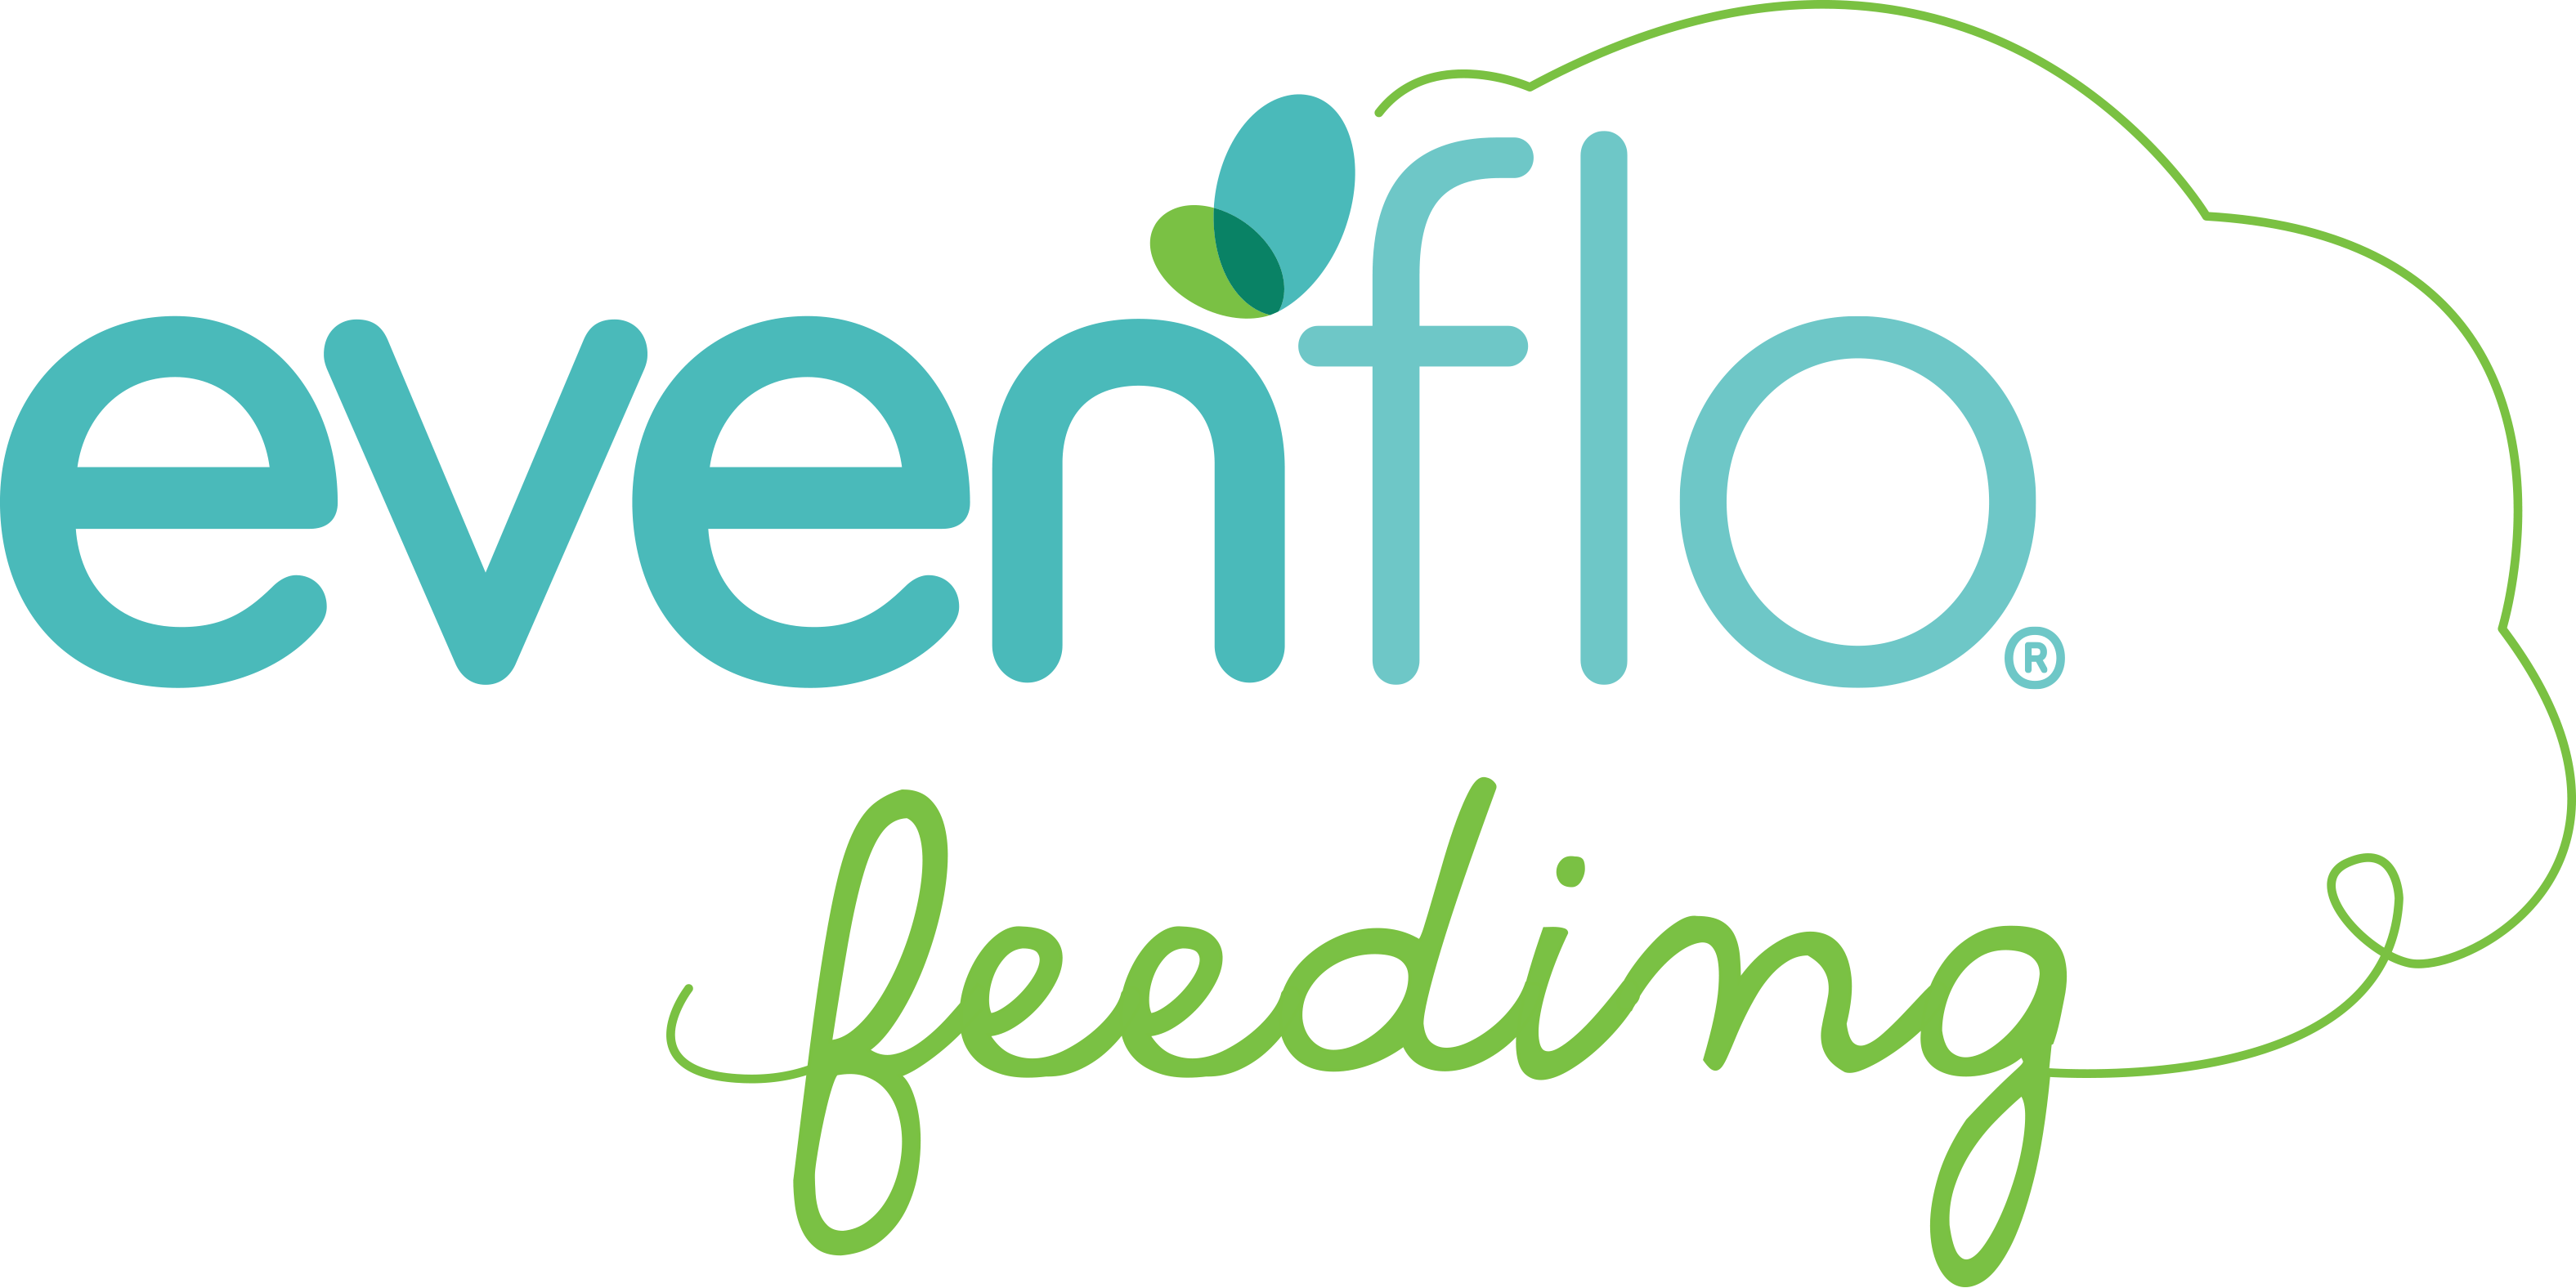 Evenflo Logo - Evenflo-Feeding-Logo